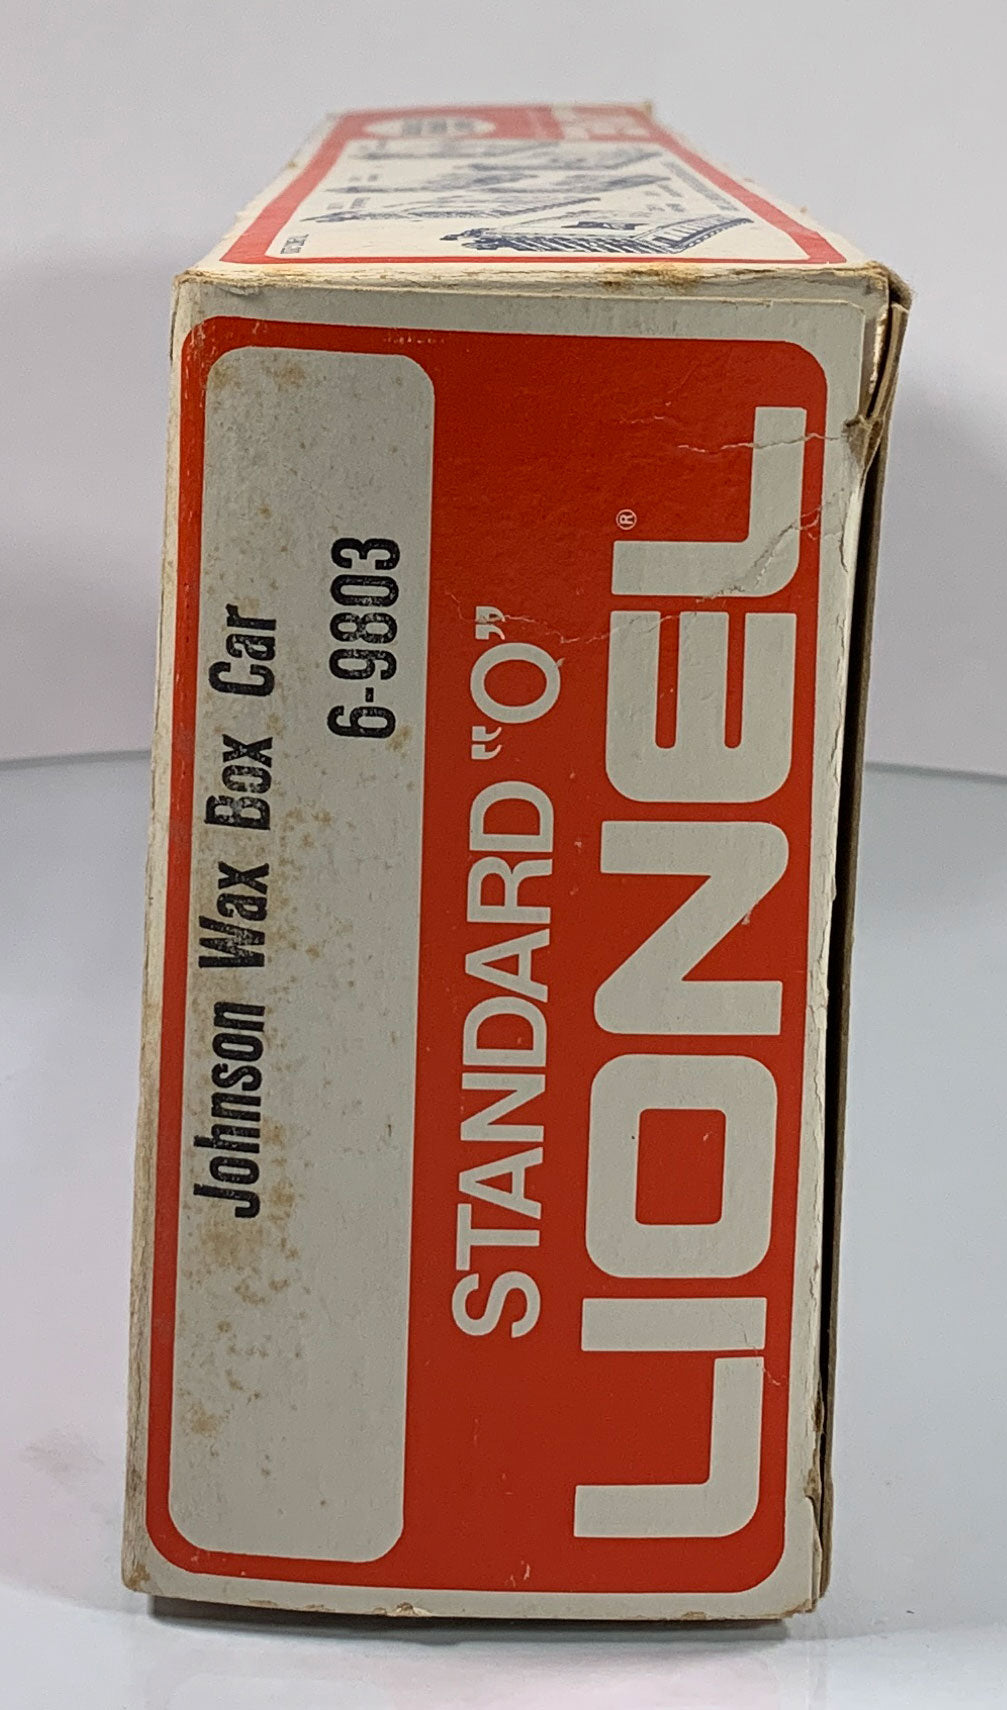 LIONEL • STD O GAUGE • 1973 Johnson Wax Boxcar 6-9803 • EX COND